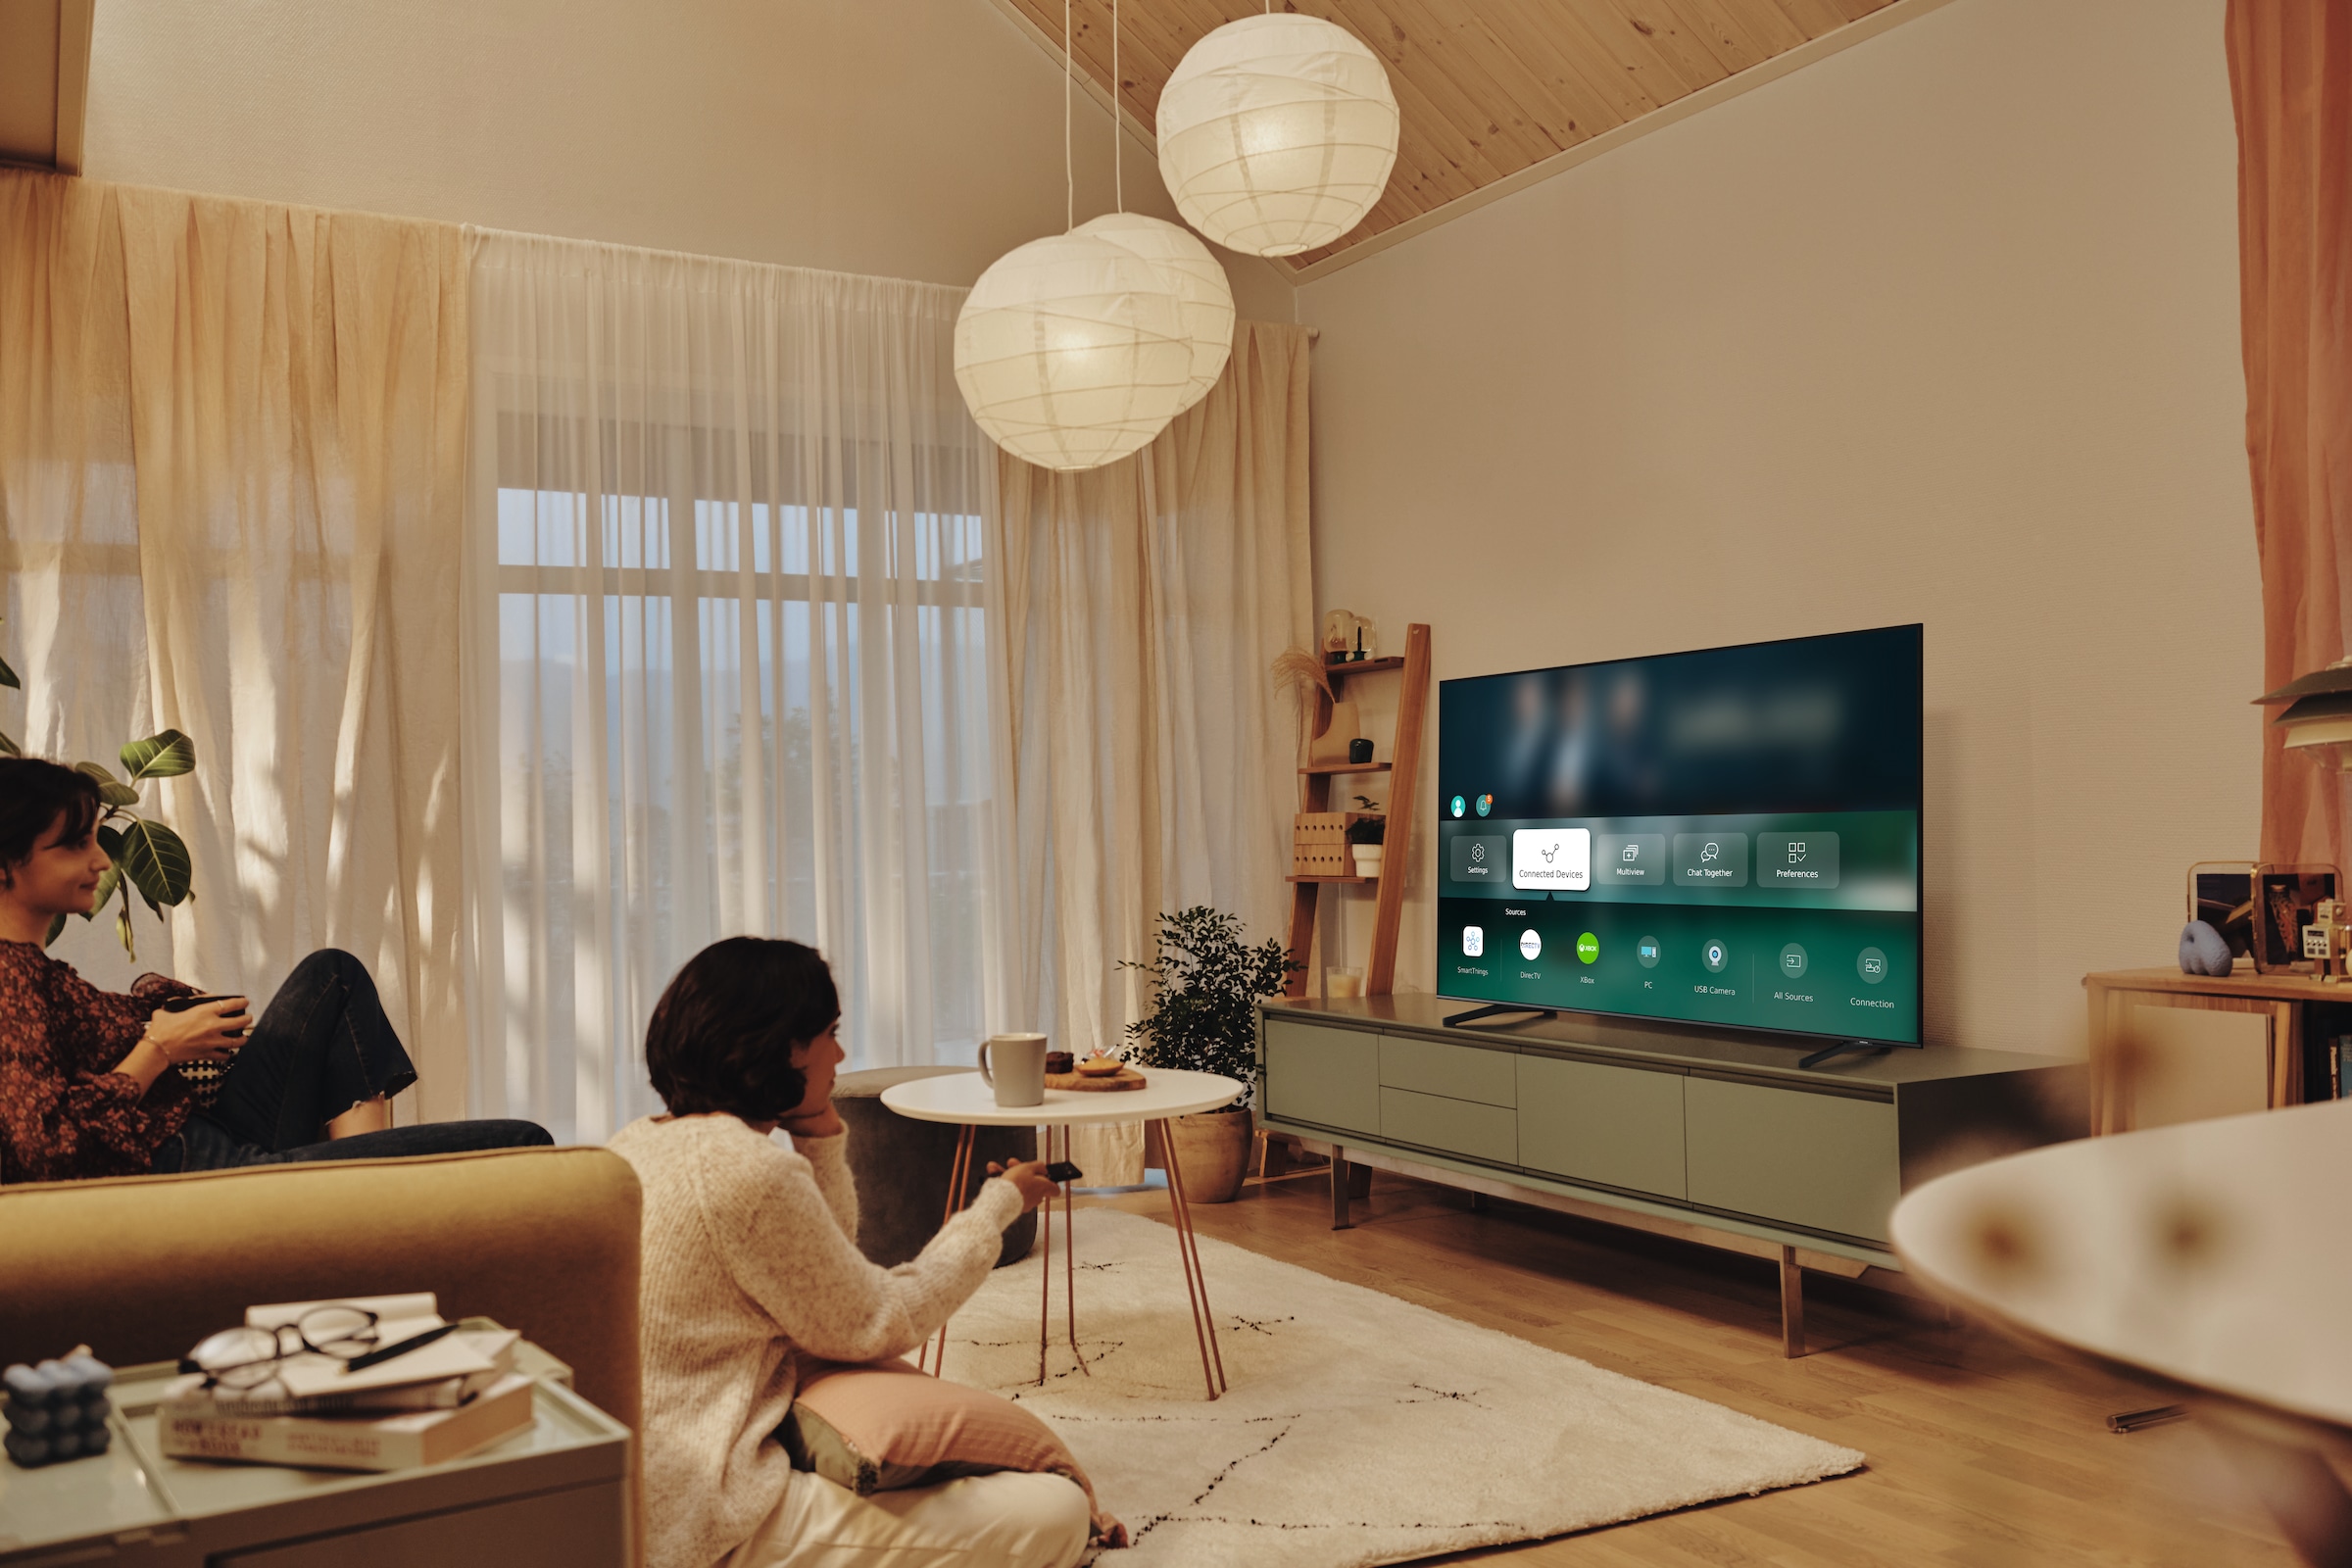 Samsung LED-Fernseher »85" Crystal UHD 4K BU8079 (2022)«, 214 cm/85 Zoll, 4K Ultra HD, Smart-TV, Crystal Prozessor 4K,HDR,Motion Xcelerator